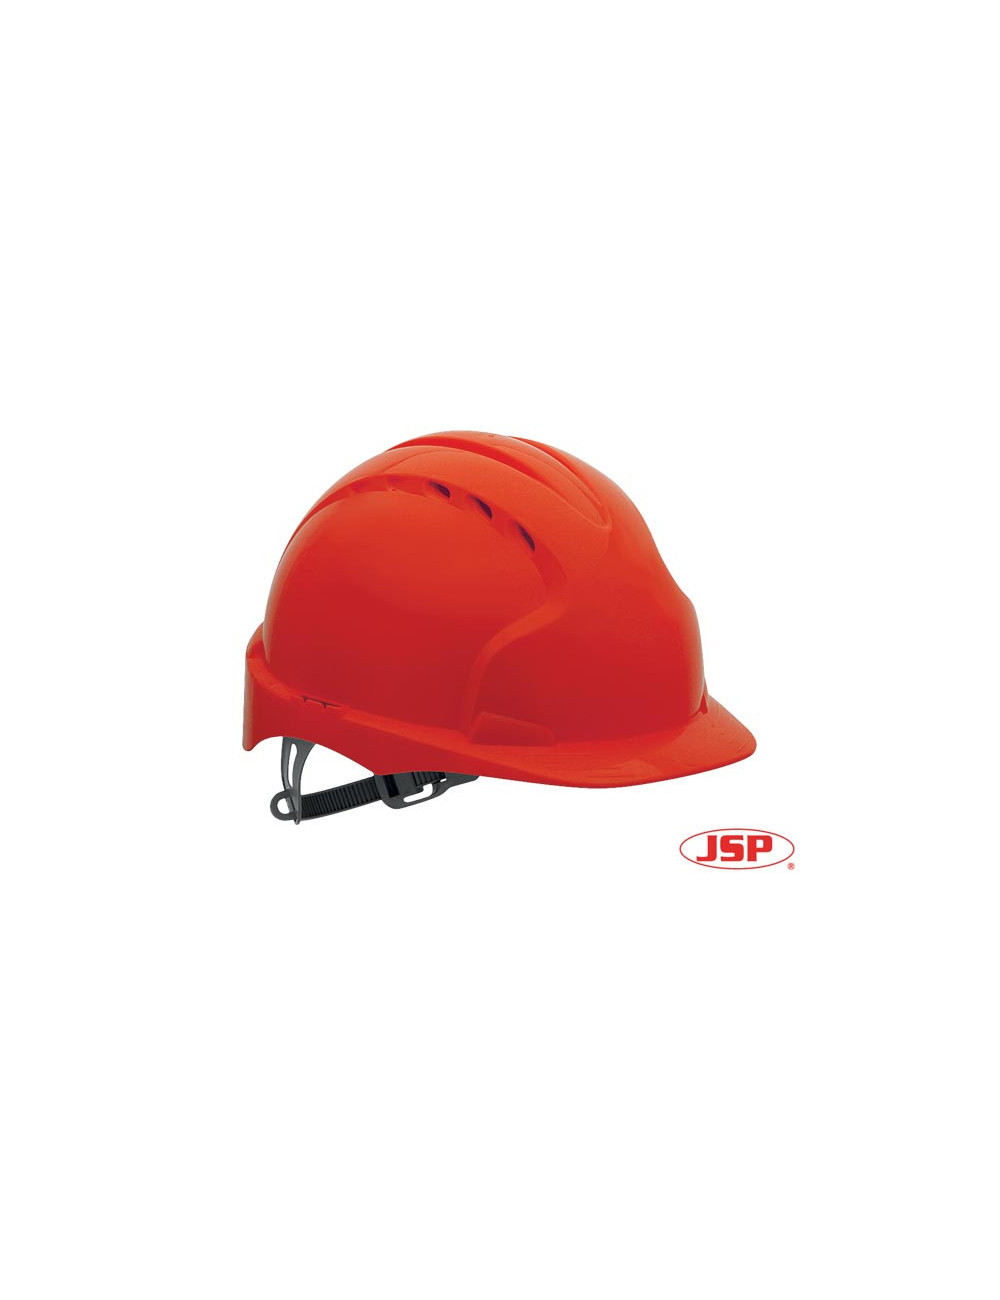 Protective helmet kas-evo2 c red Jsp